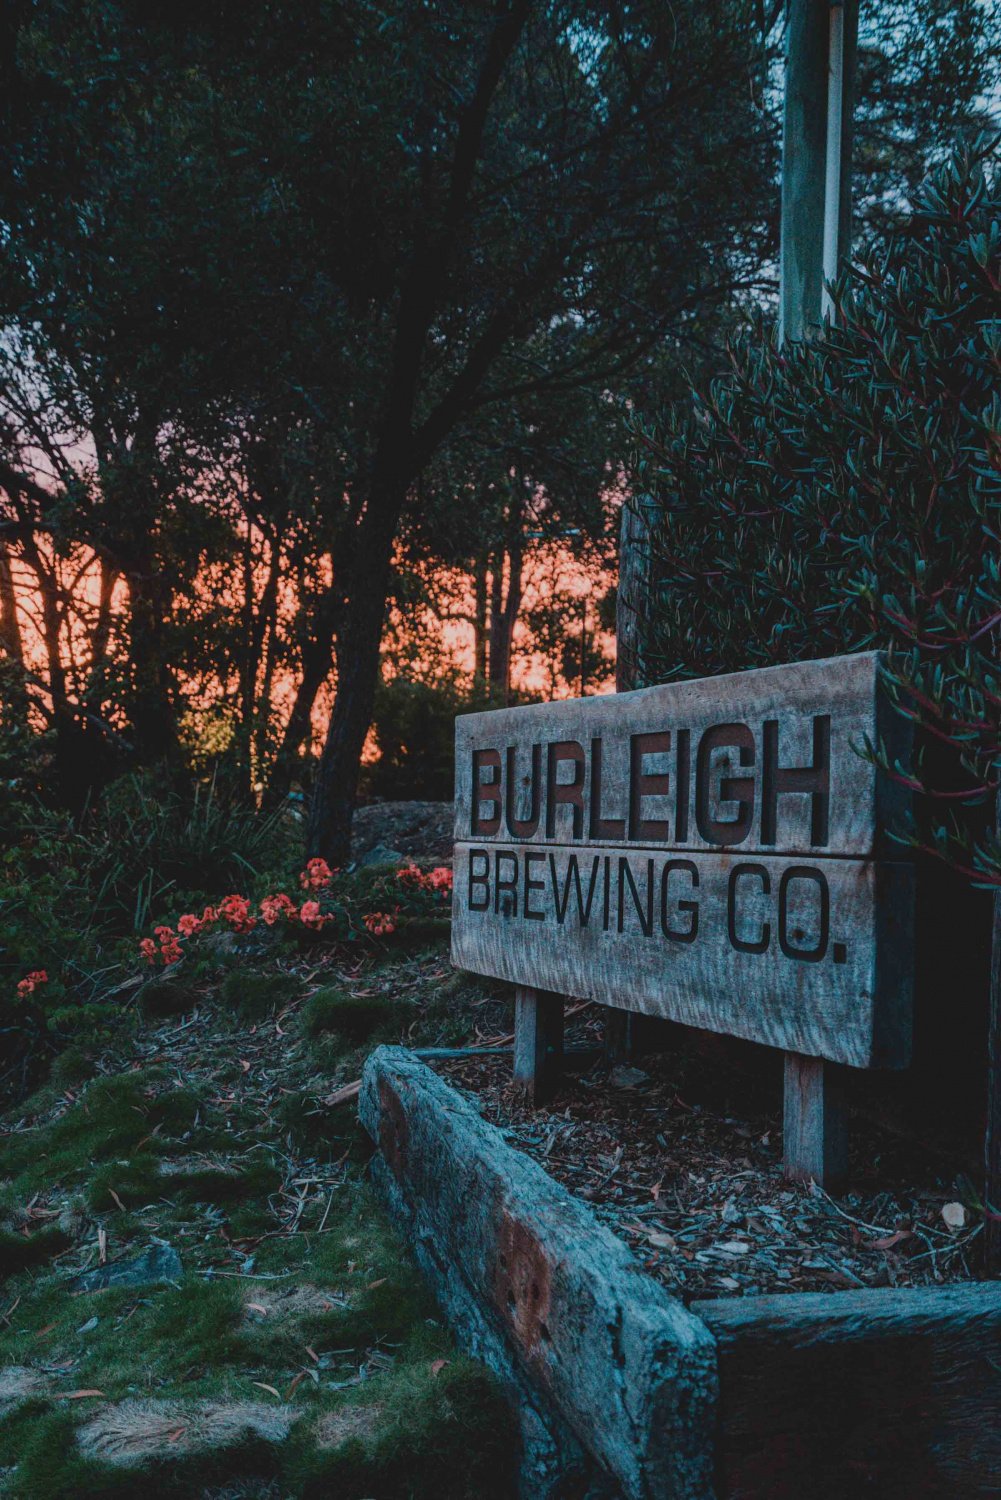 Get Festive at Burleigh Brewing